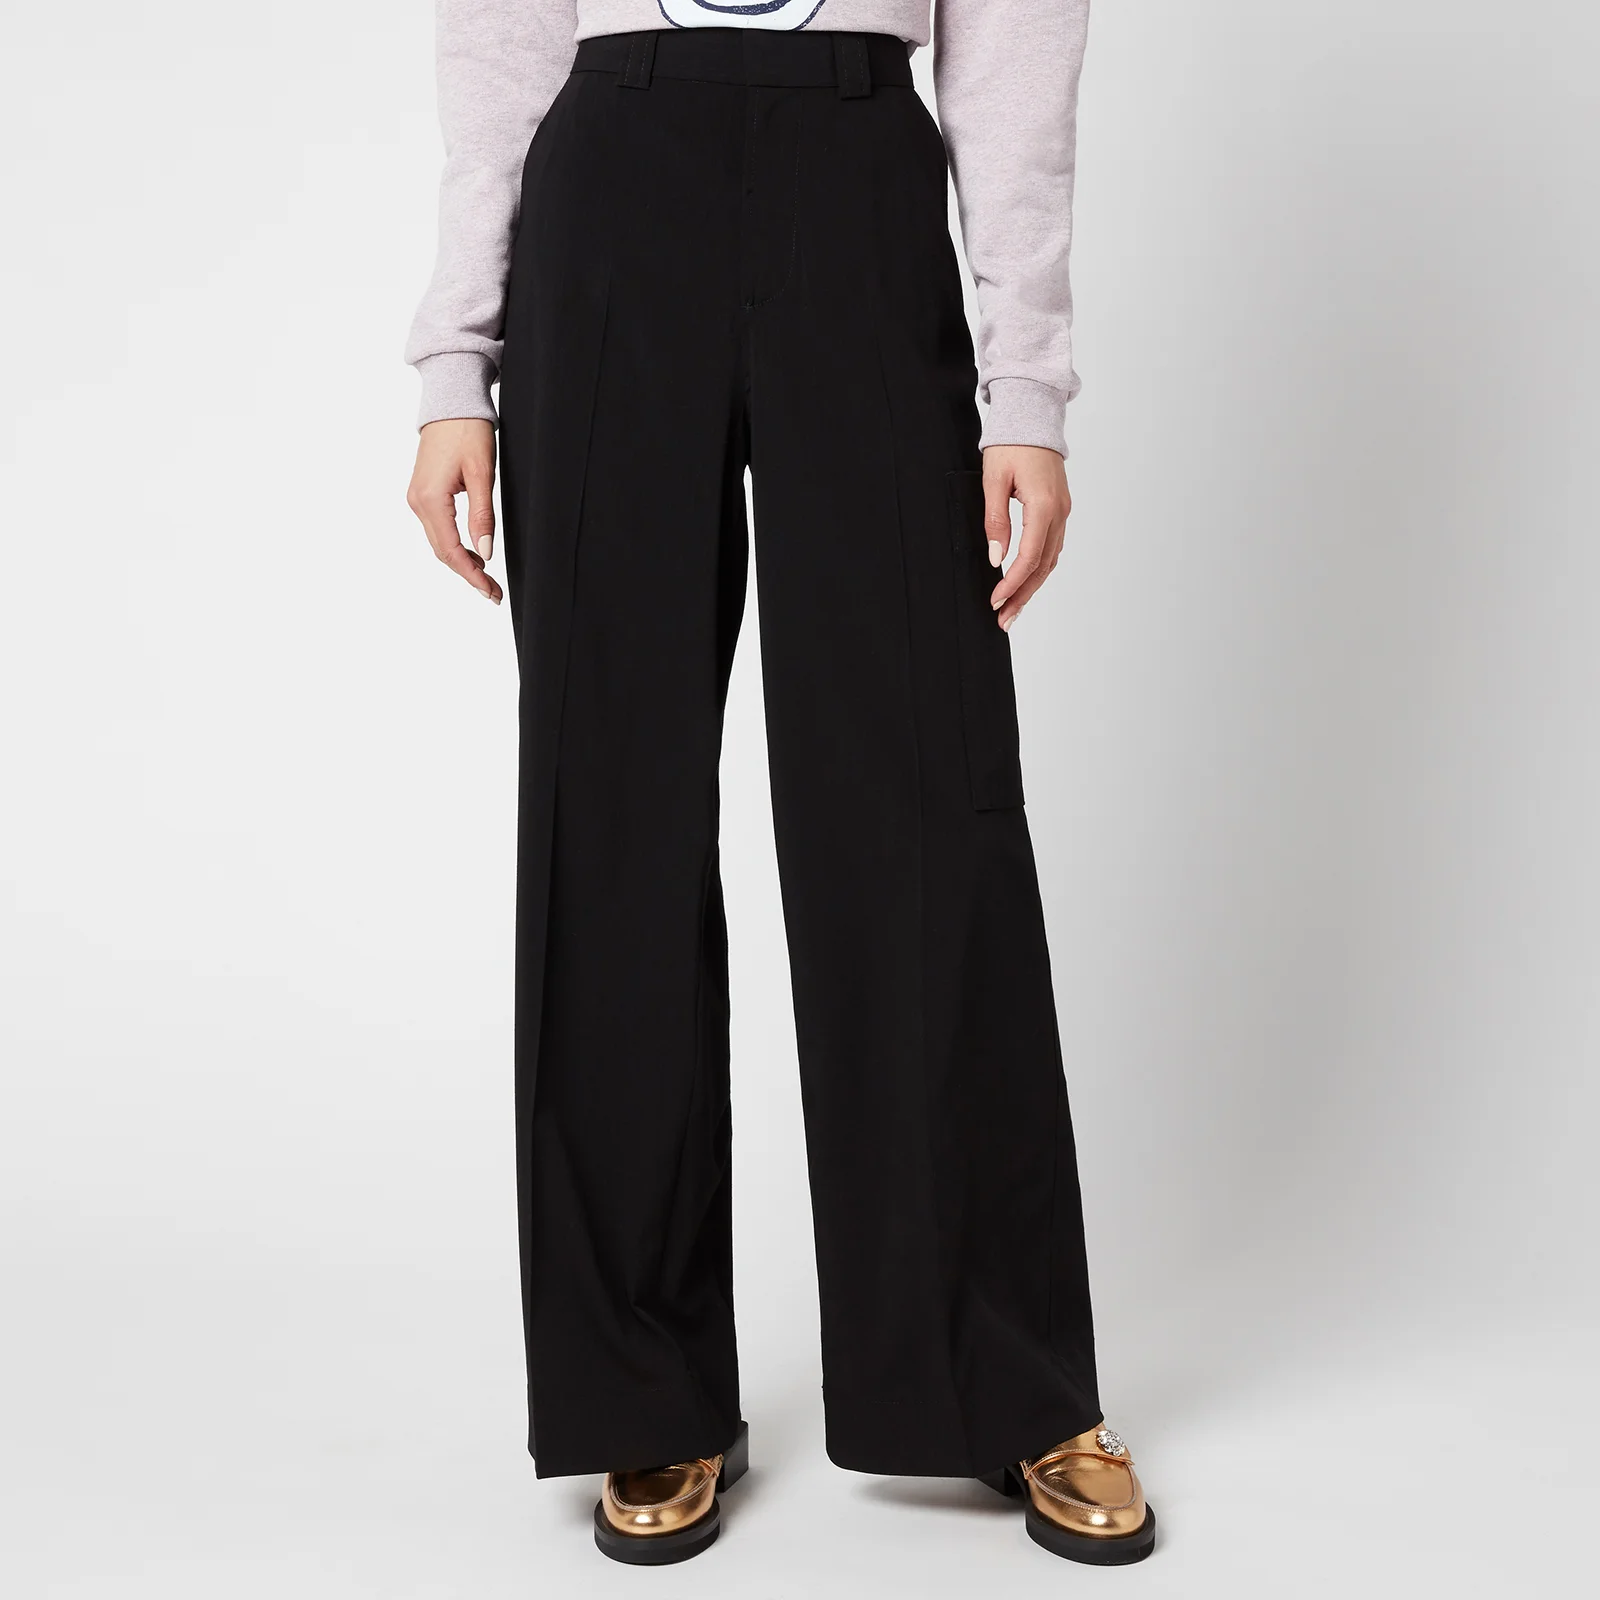 Ganni Women's Melange Suiting Trousers - Black Image 1